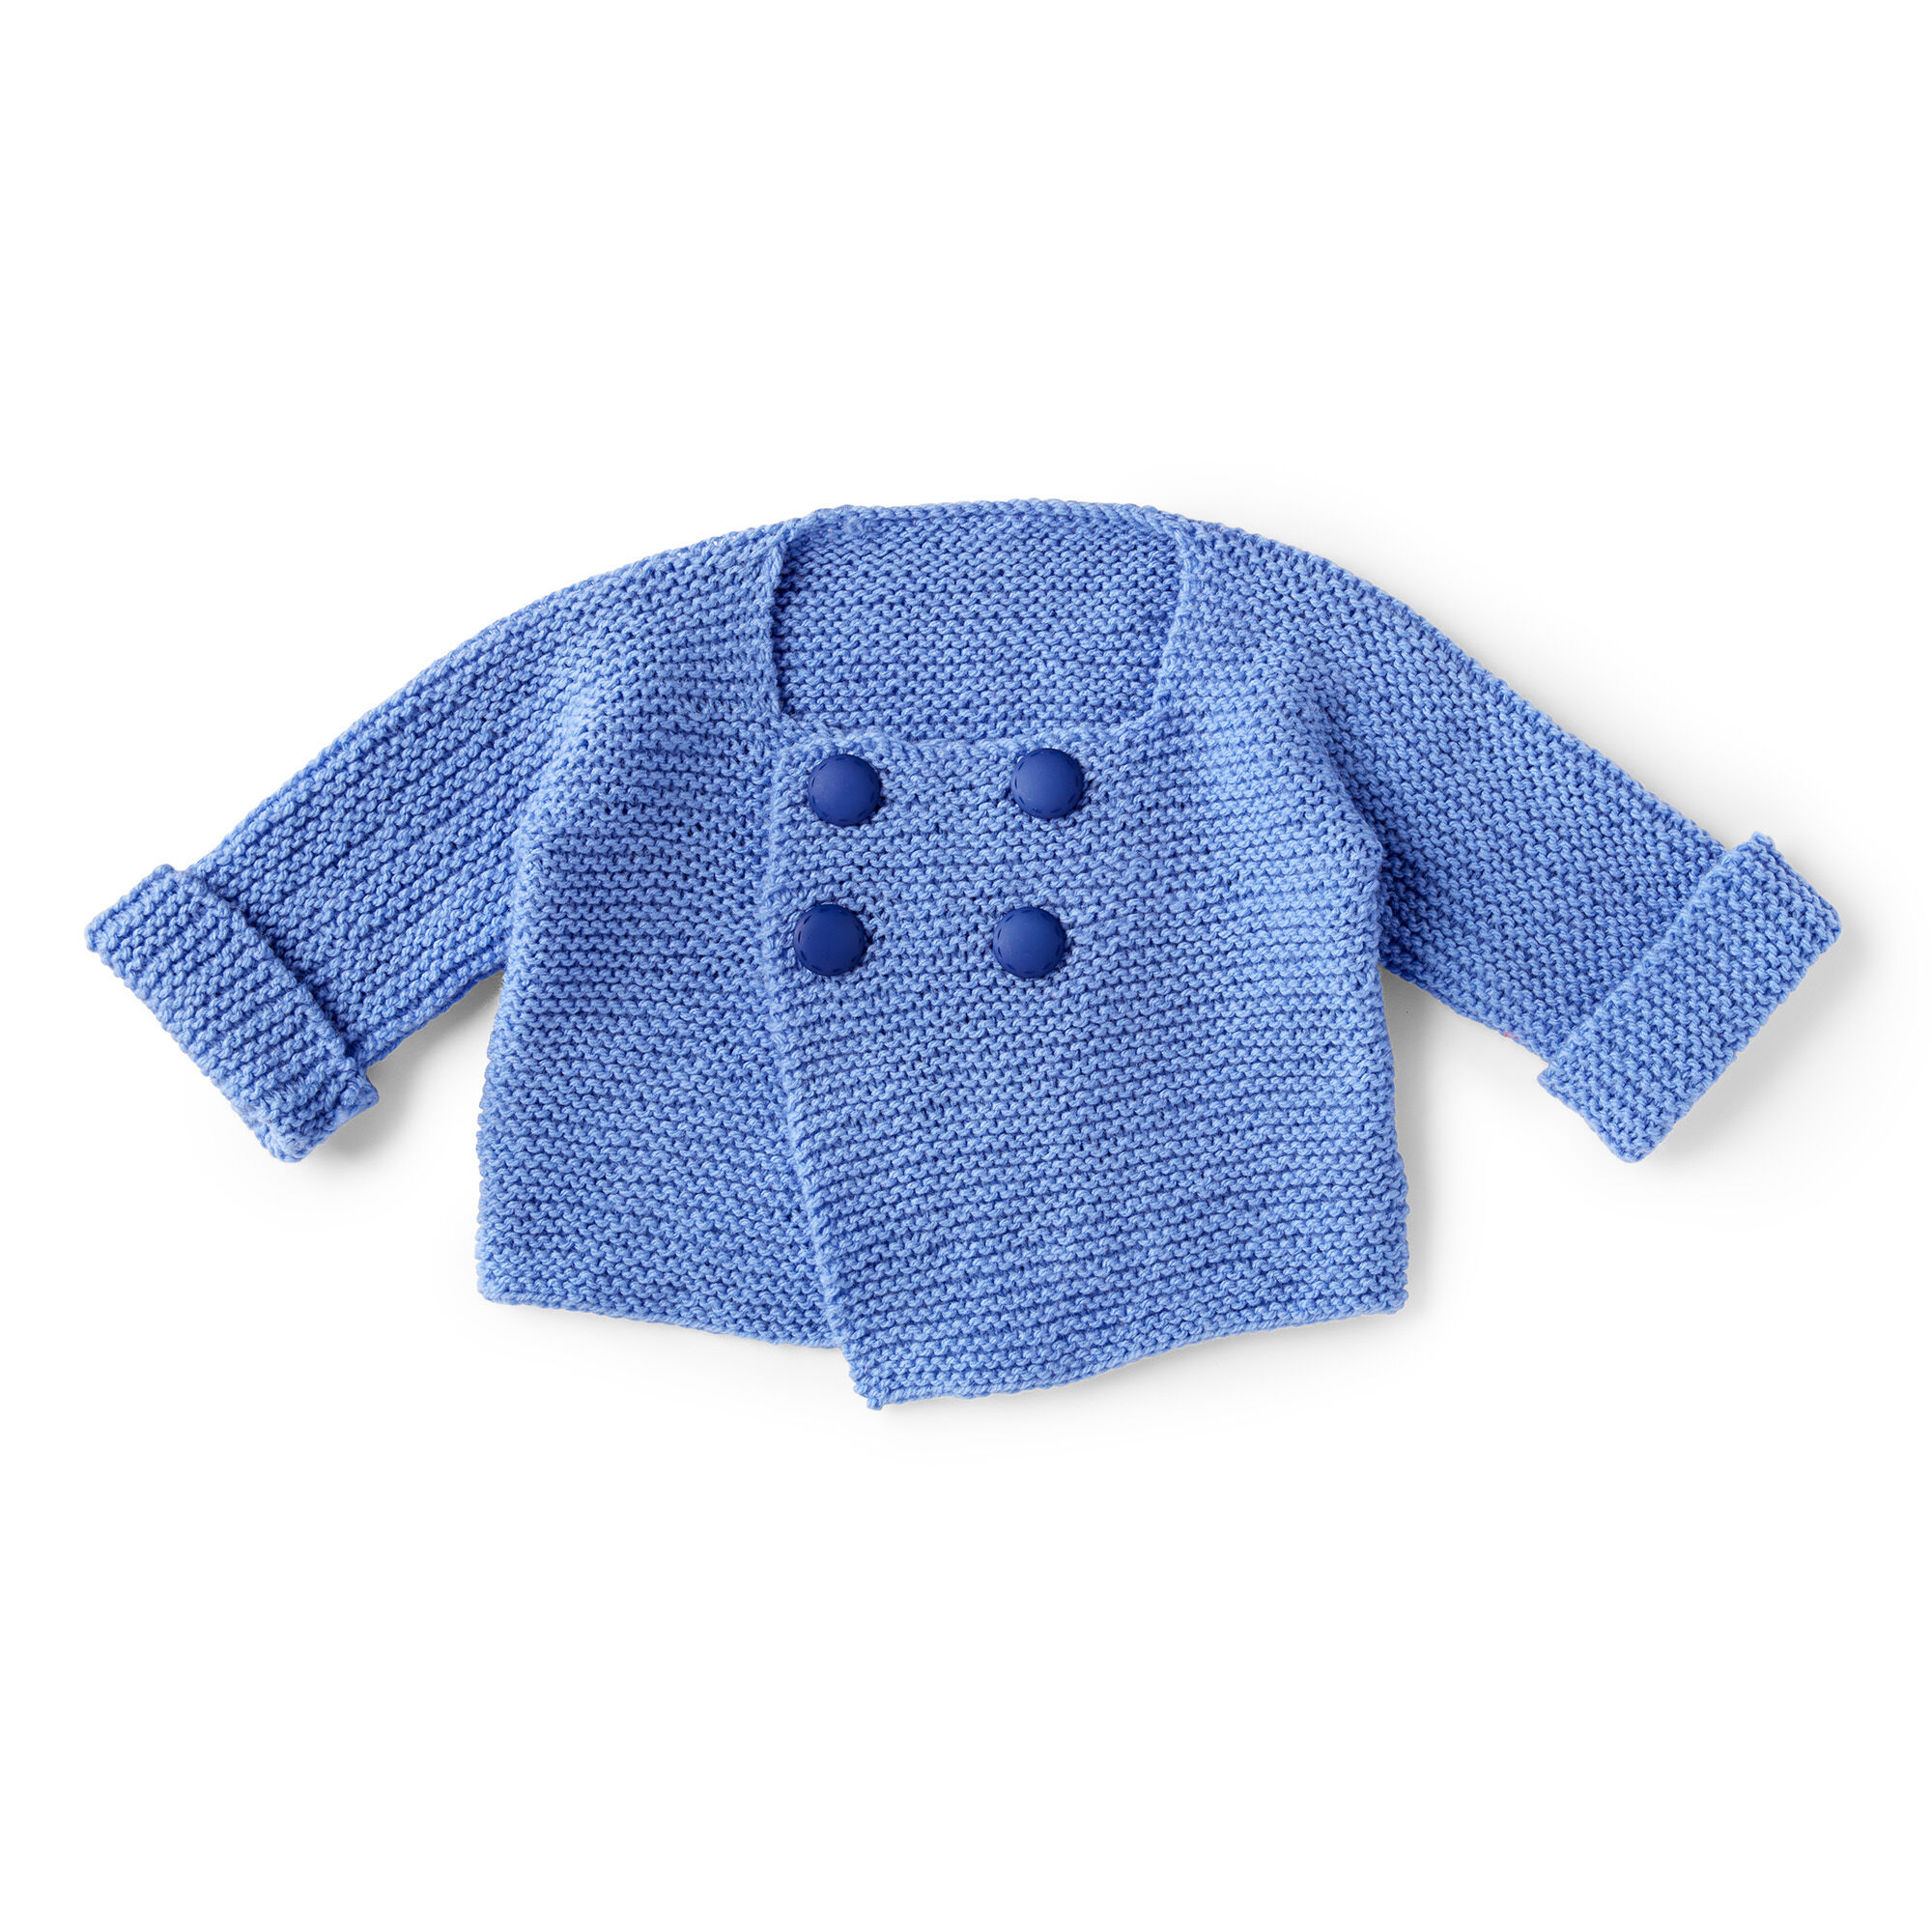 Knitting Patterns Galore - Baby's First Knit Jacket